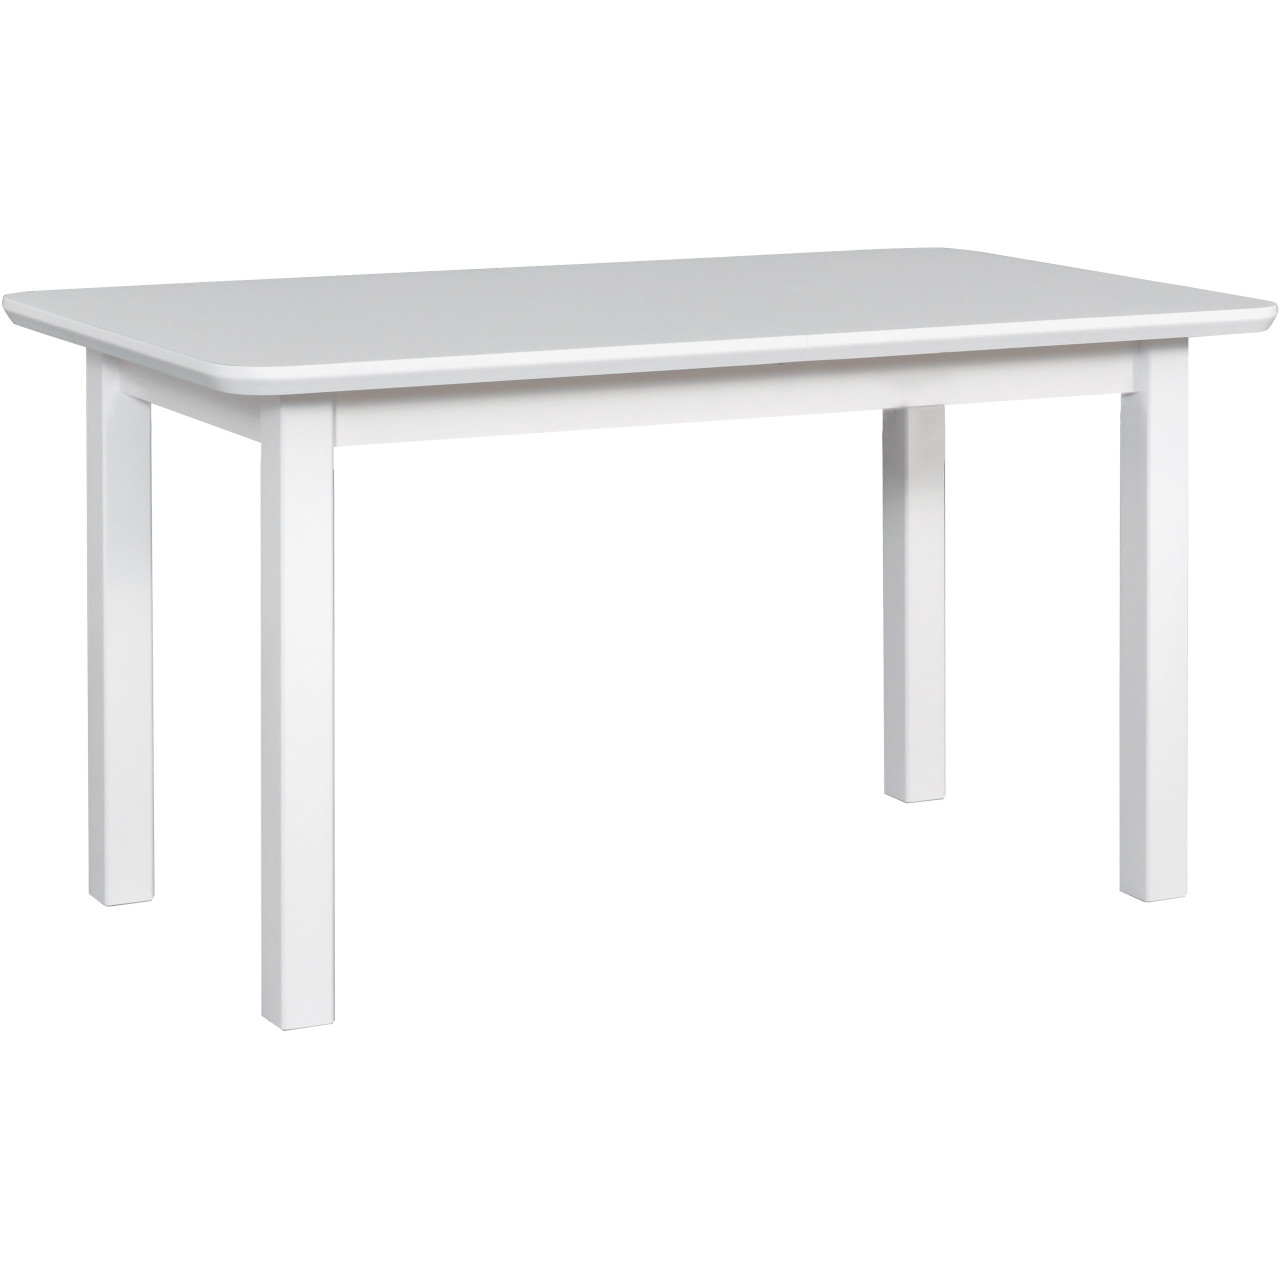 Stôl WENUS 2 S 80x140/180 biely, dubová dyha